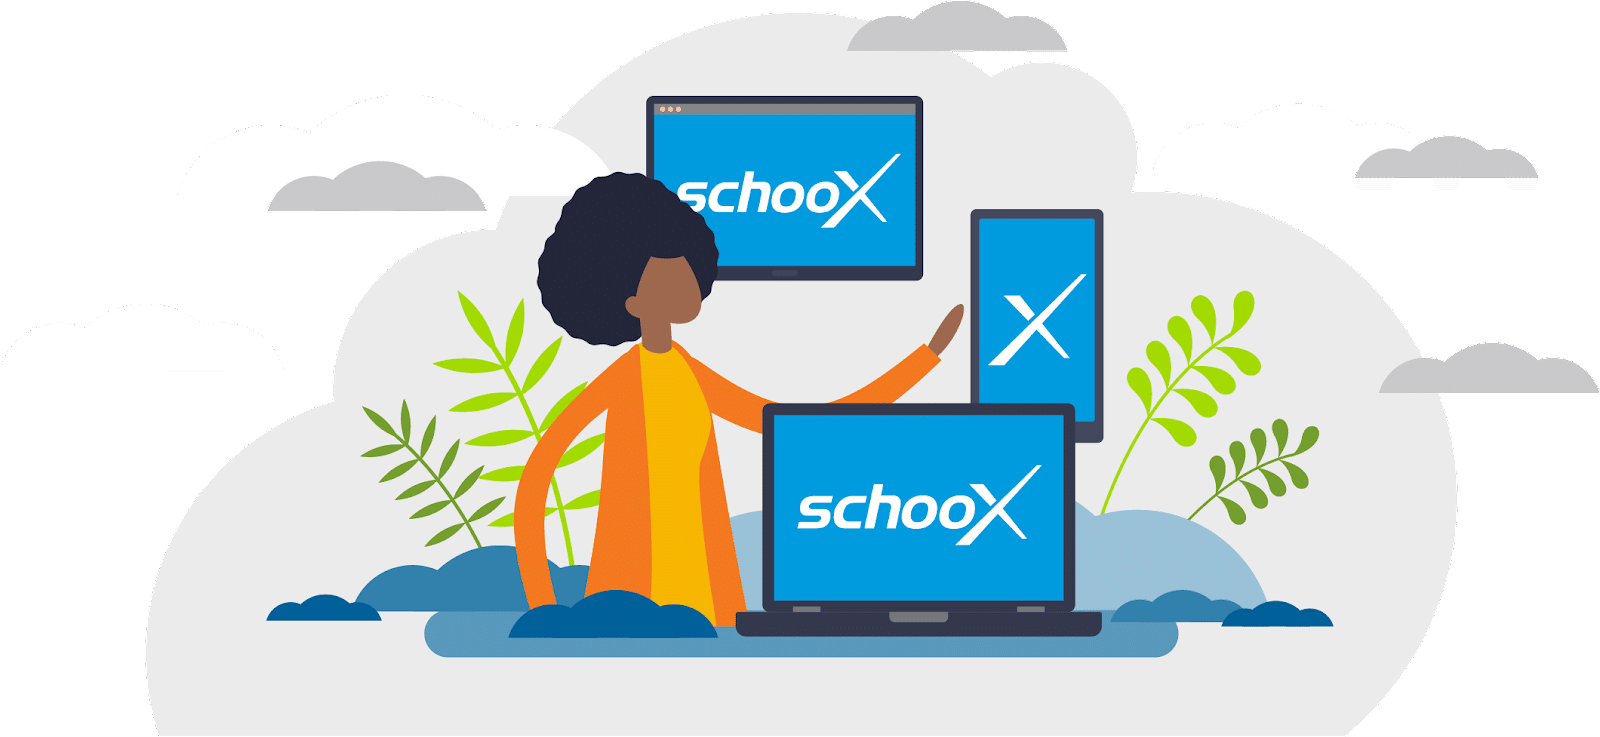 schoox-devices-illustration